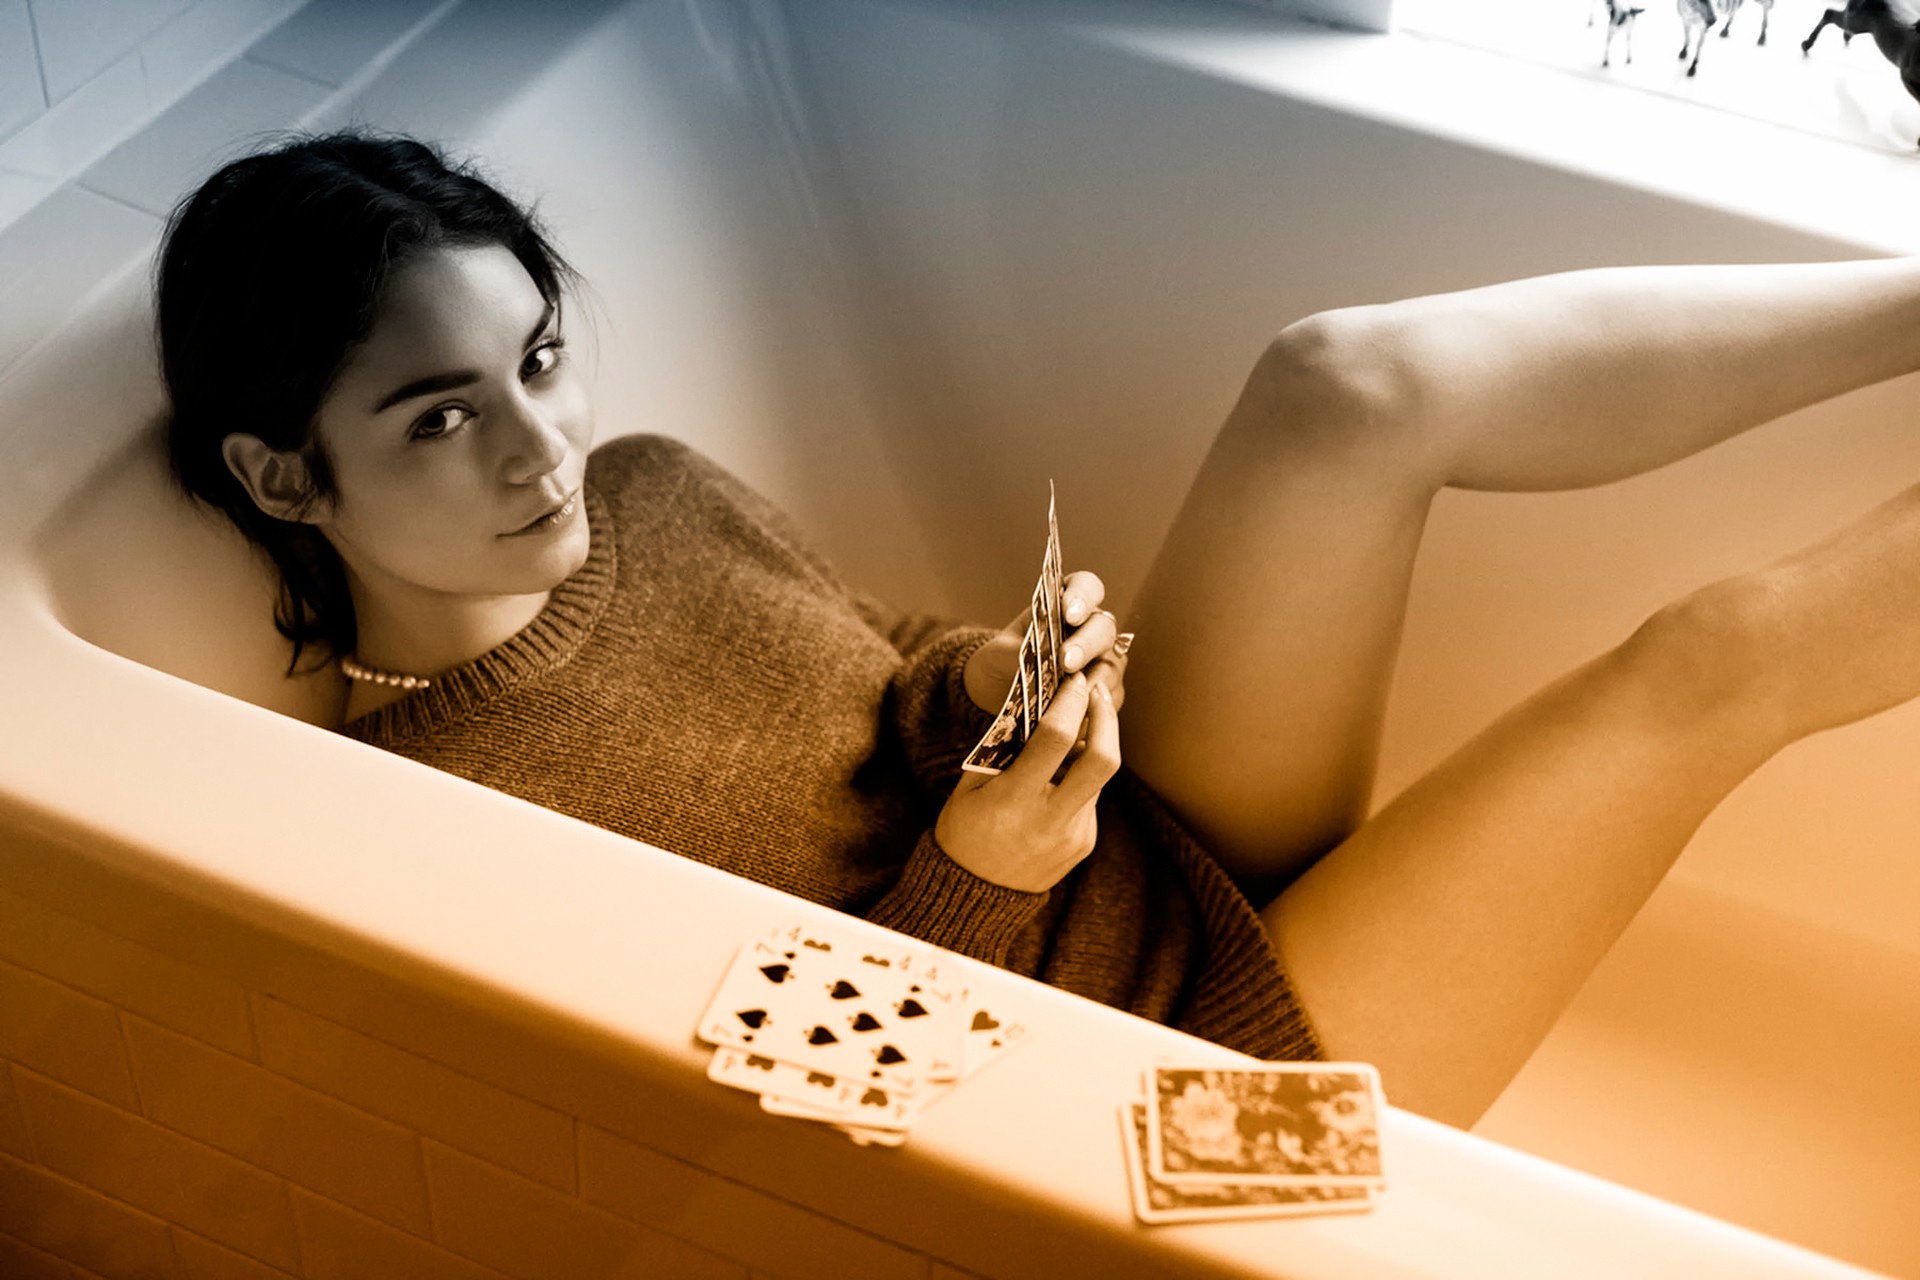 People 1920x1280 Vanessa Hudgens gradient playing cards bathtub sweater women in bathtub looking at viewer women indoors legs indoors